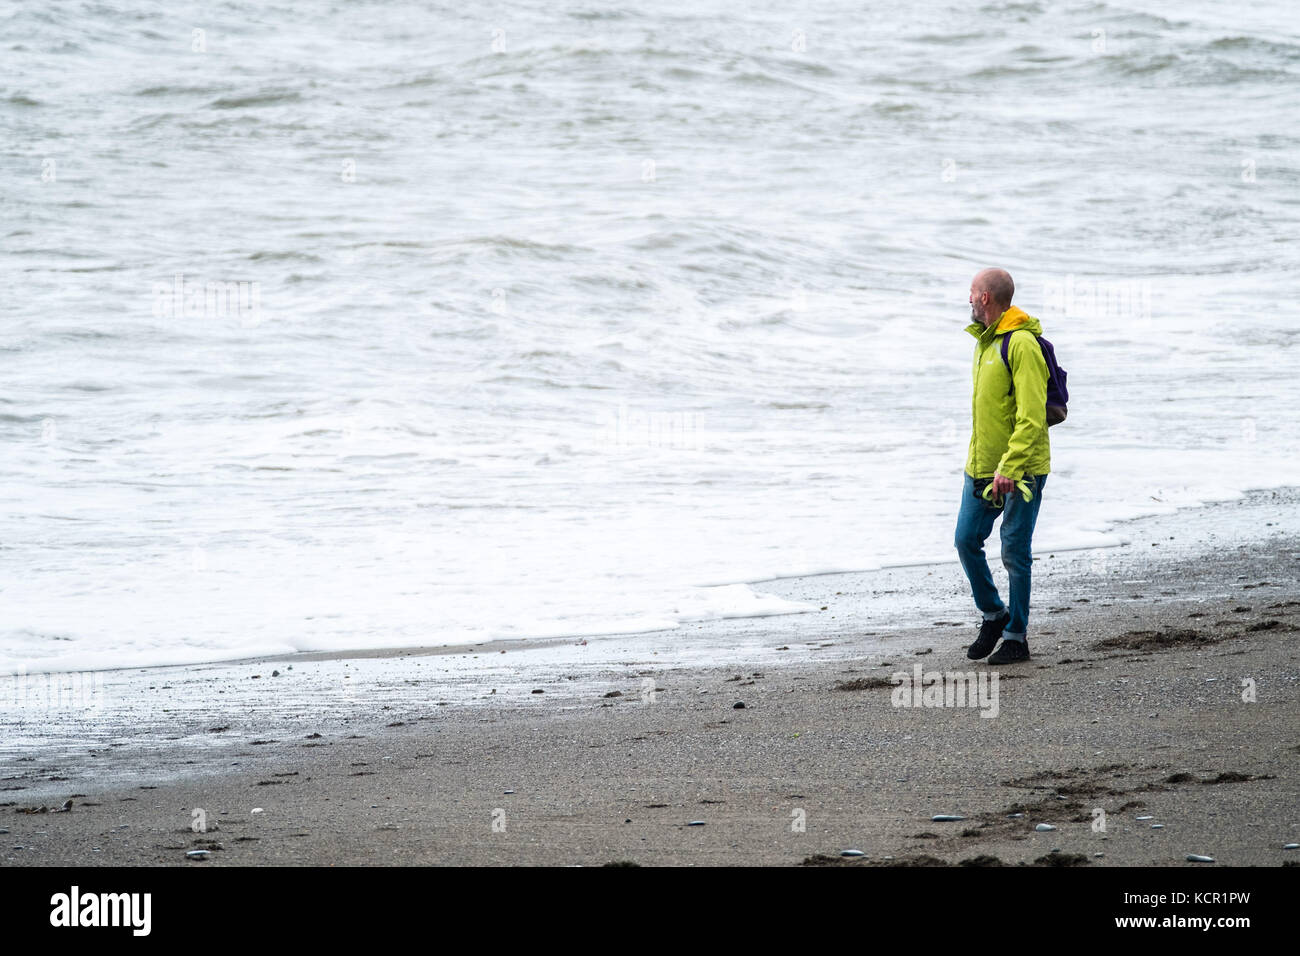 Aberystwyth Wales UK, sabato 07 ottobre 2017 uk meteo ma nwatching onde come egli cammina lungo la spiaggia su una torbida e breezy pomeriggio autunnale in aberystwyth wales Photo credit: keith morris/alamy live news Foto Stock